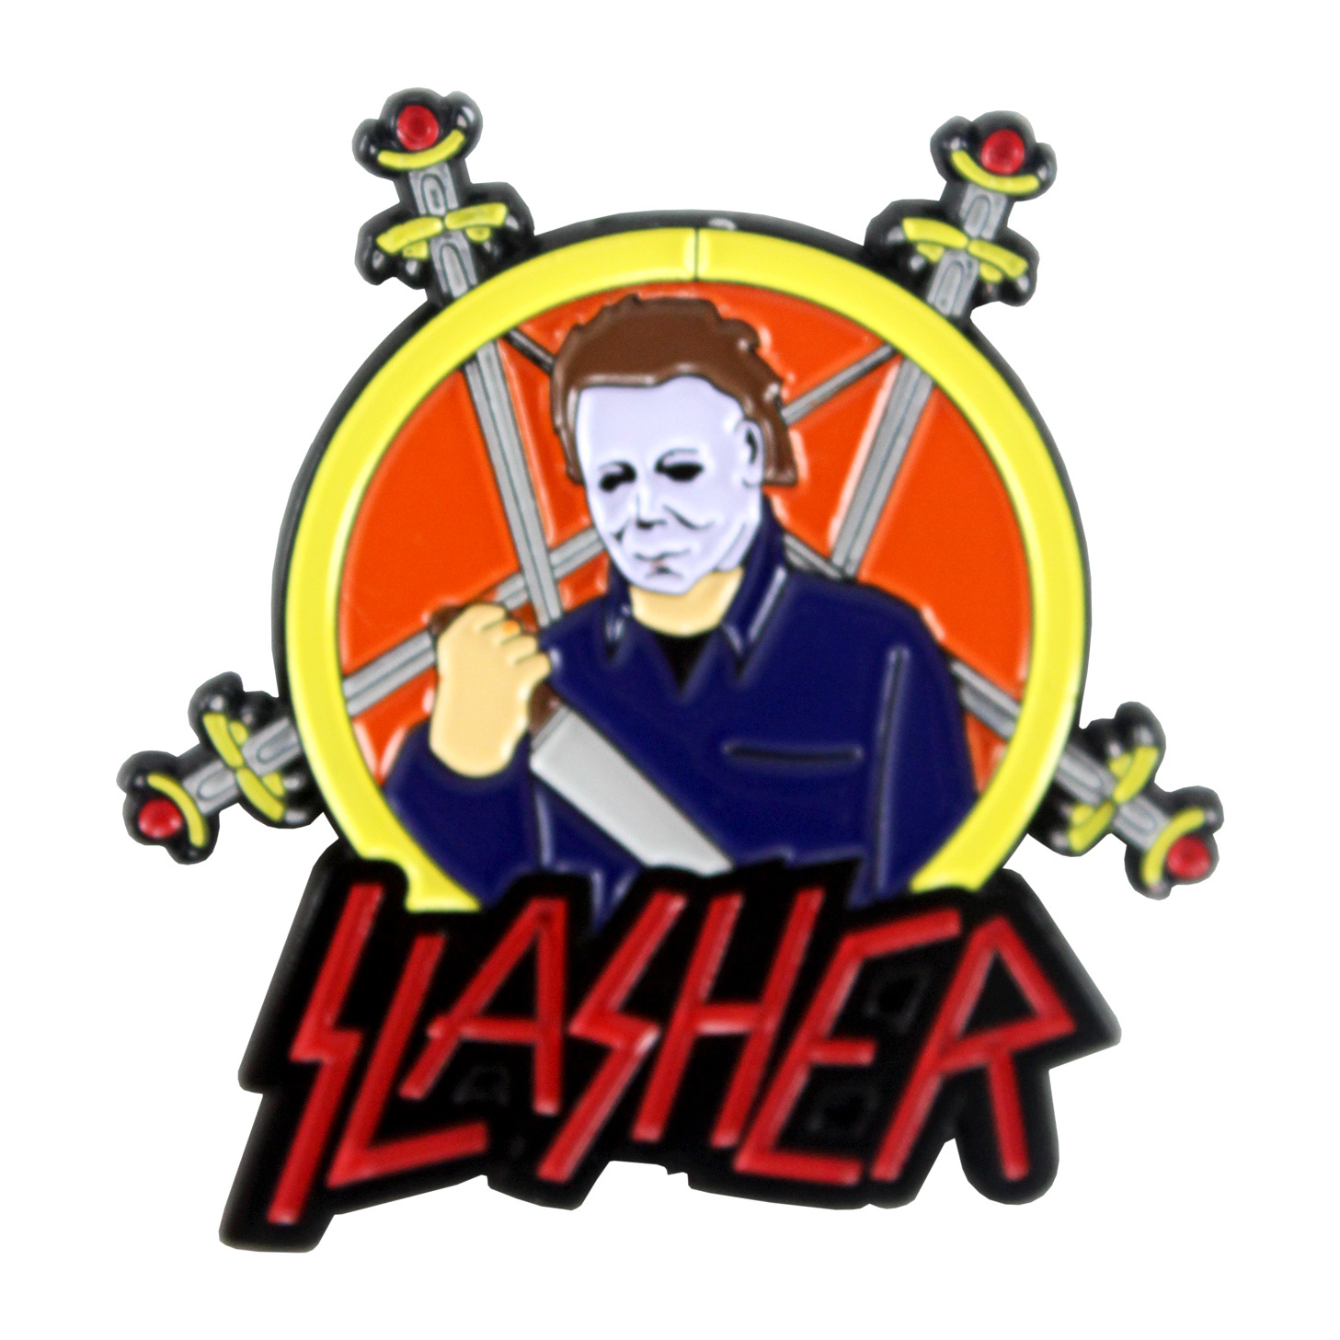 Slasher - Michael Myers Pin